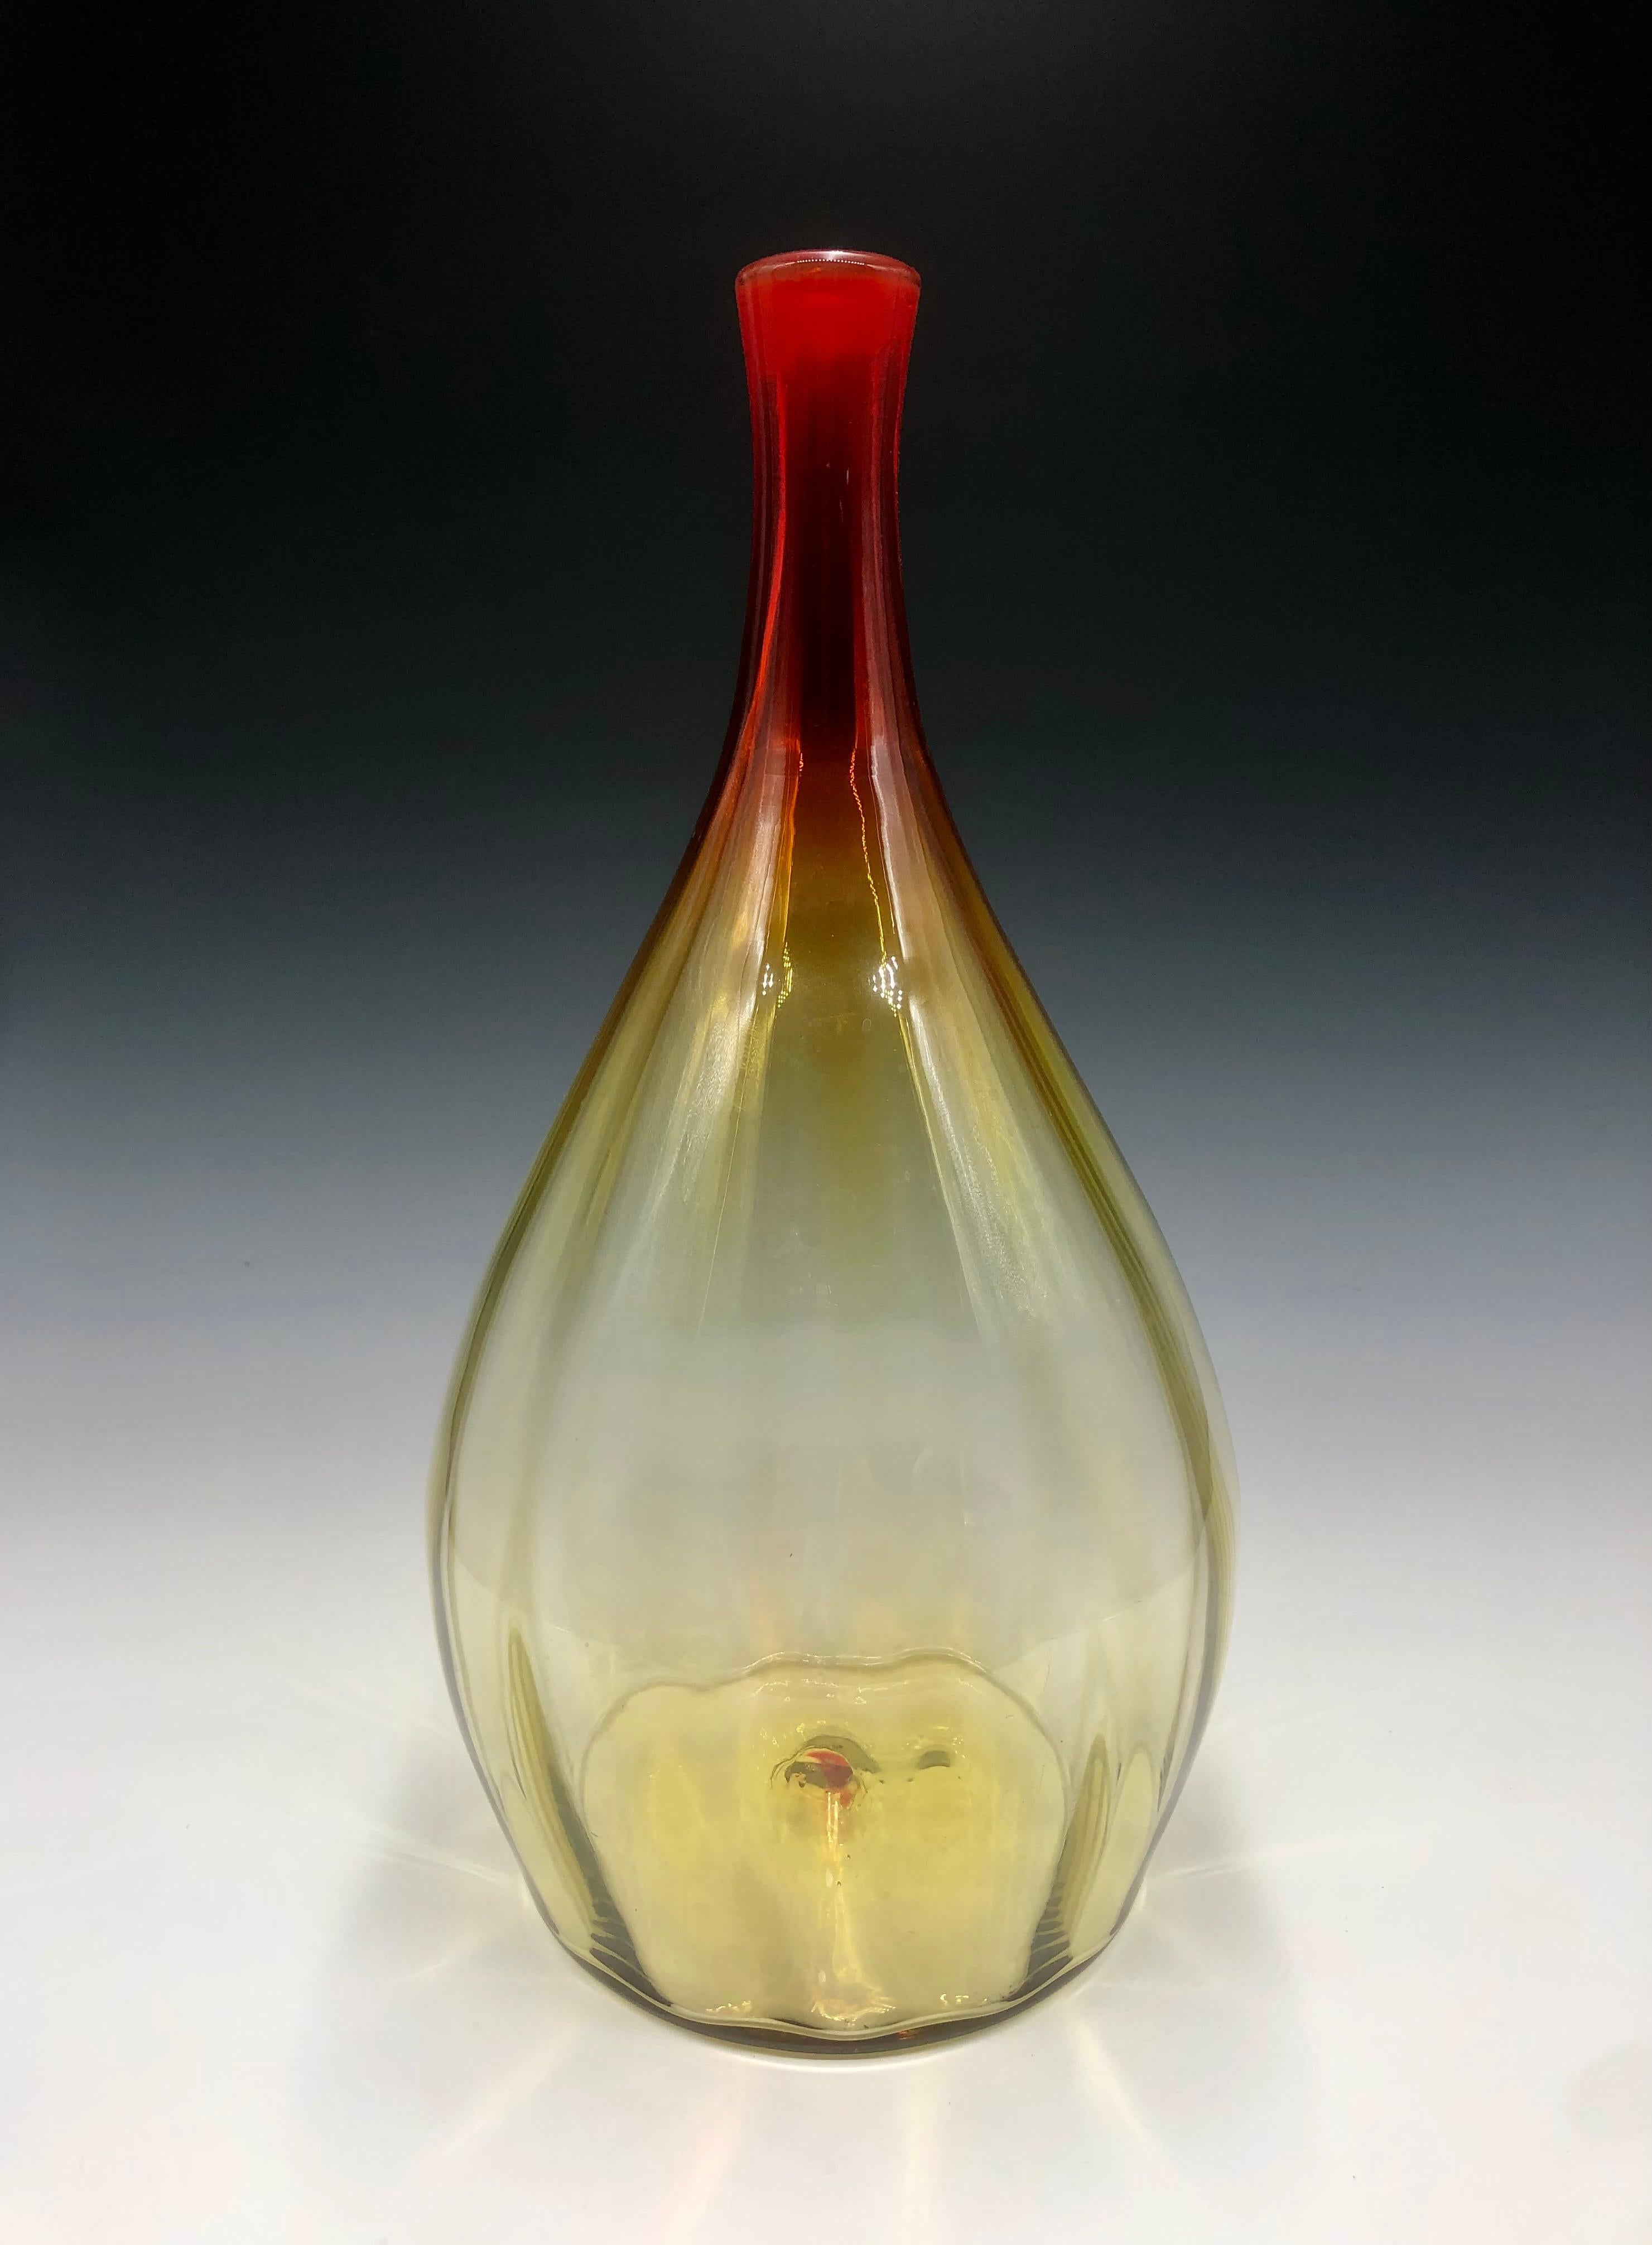 Grand vase en verre nervuré jaune rouge amberina Blenko